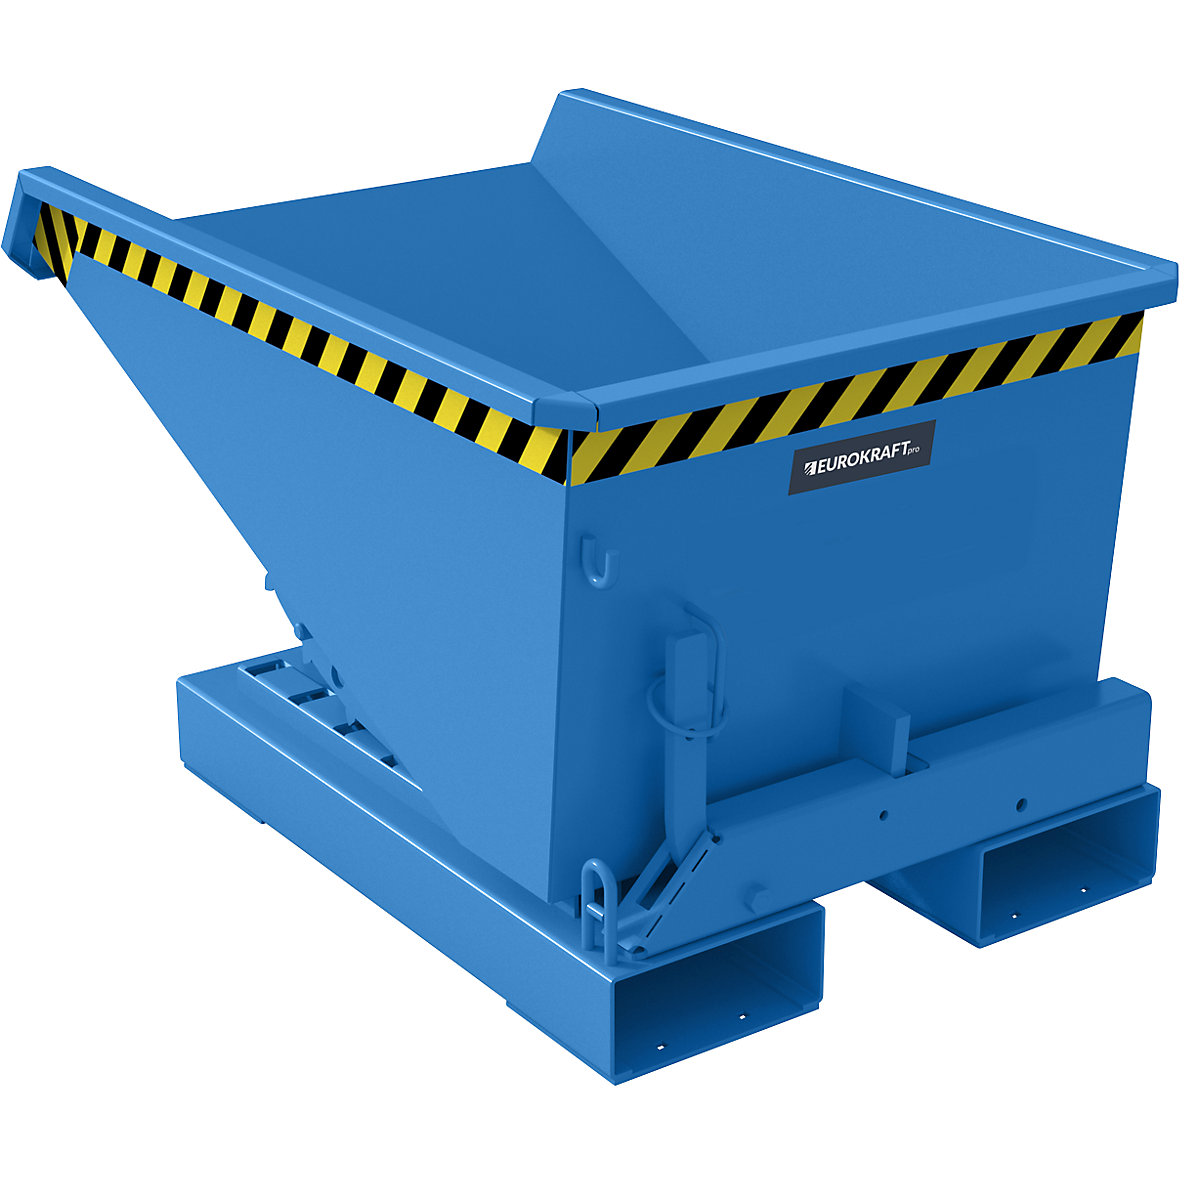 EUROKRAFTpro Kippbehälter inkl. Abrollmechanismus, Volumen 0,15 m³, LxBxH 960 x 640 x 550 mm, blau